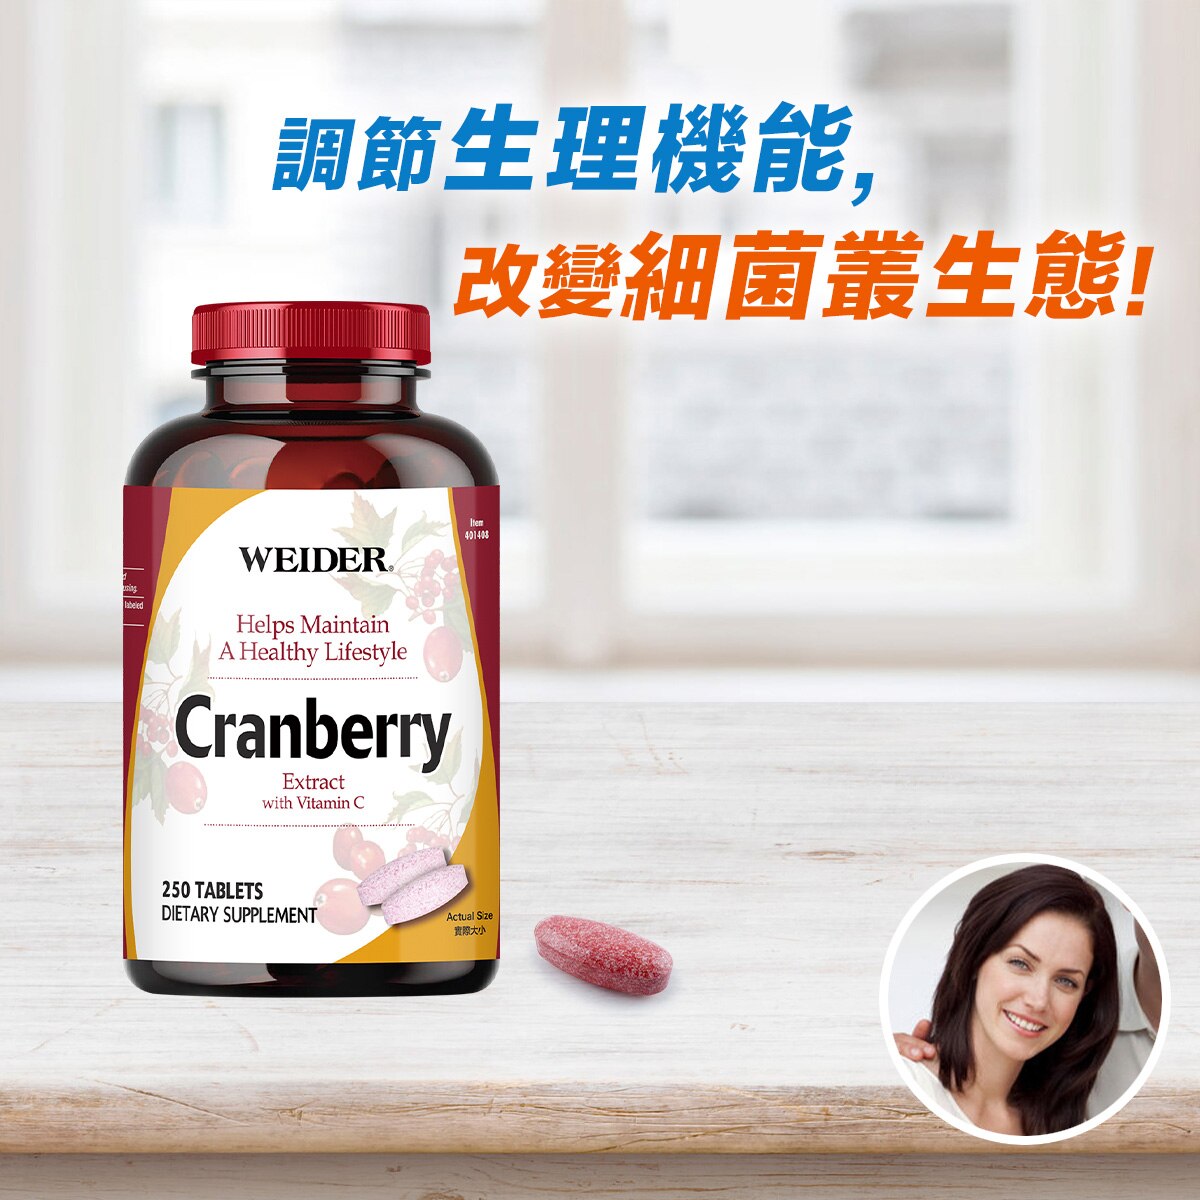 WEIDER 威德蔓越莓錠每份添加：蔓越莓1,000mg (4倍濃縮)，維生素C。含前花青素，黃酮類和奎寧酸，適用於女性健康保養。